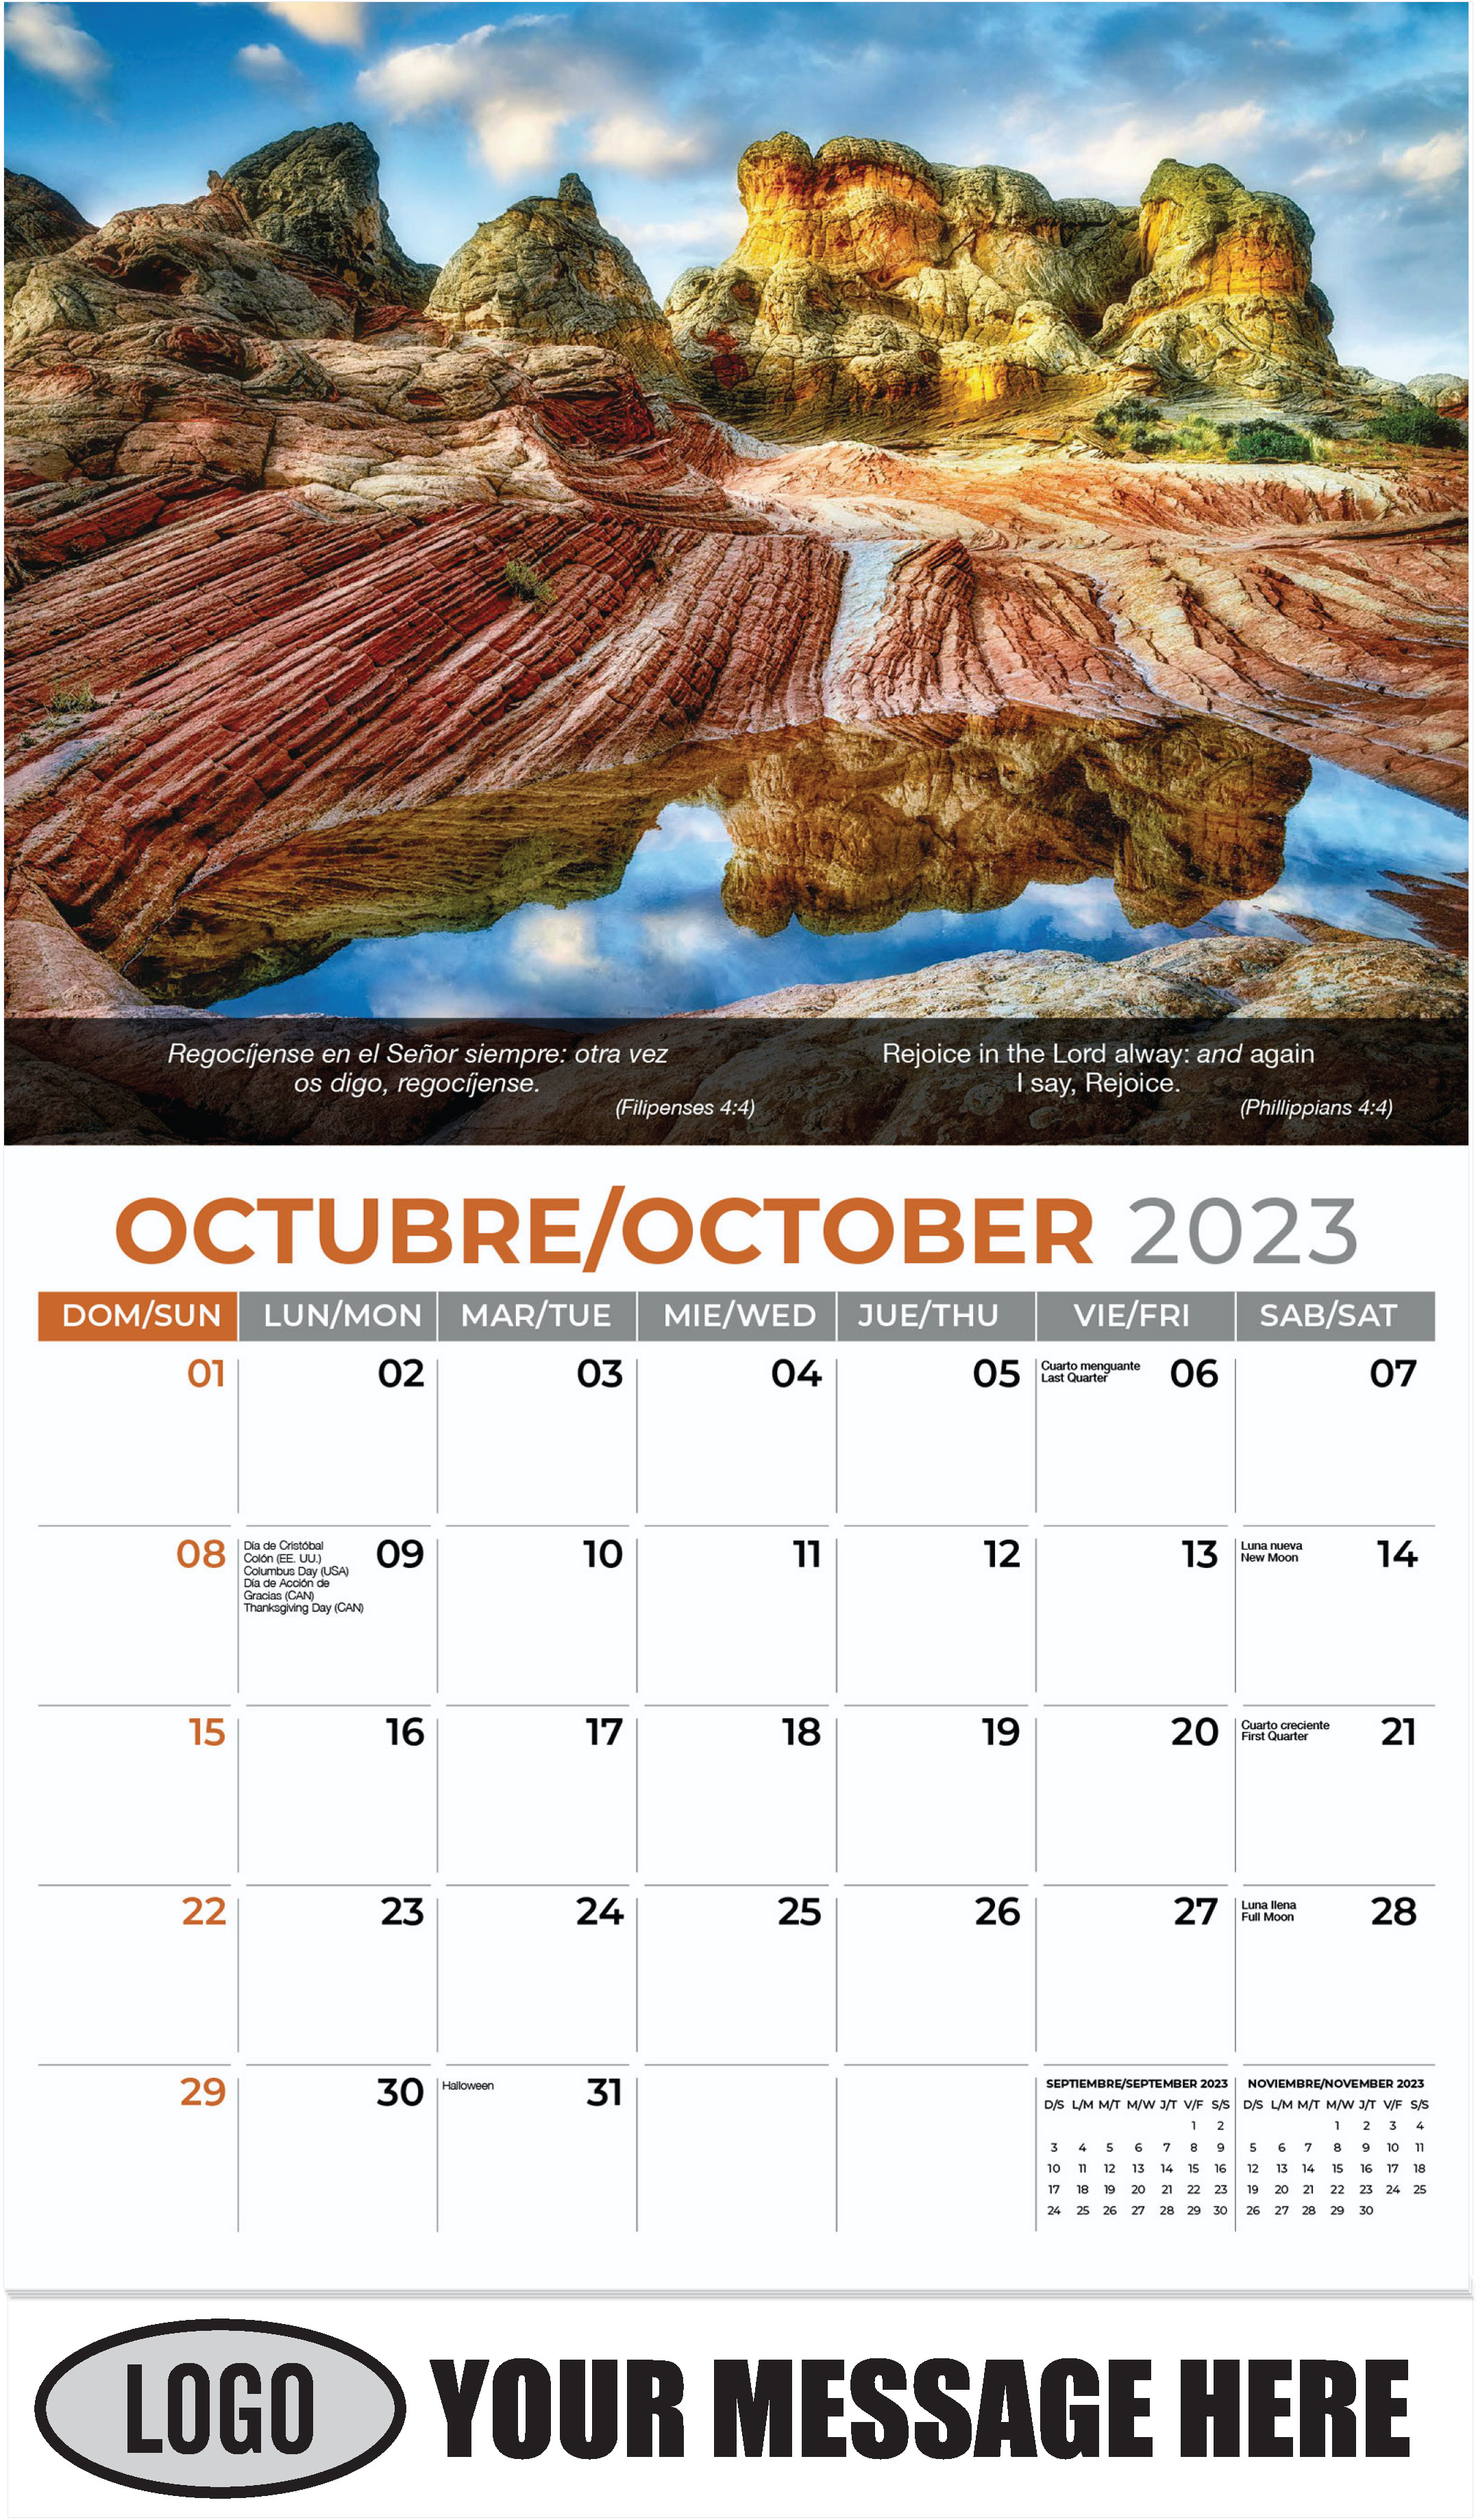 Colourful Rocks - October - Faith-Passages-Eng-Sp 2023 Promotional Calendar